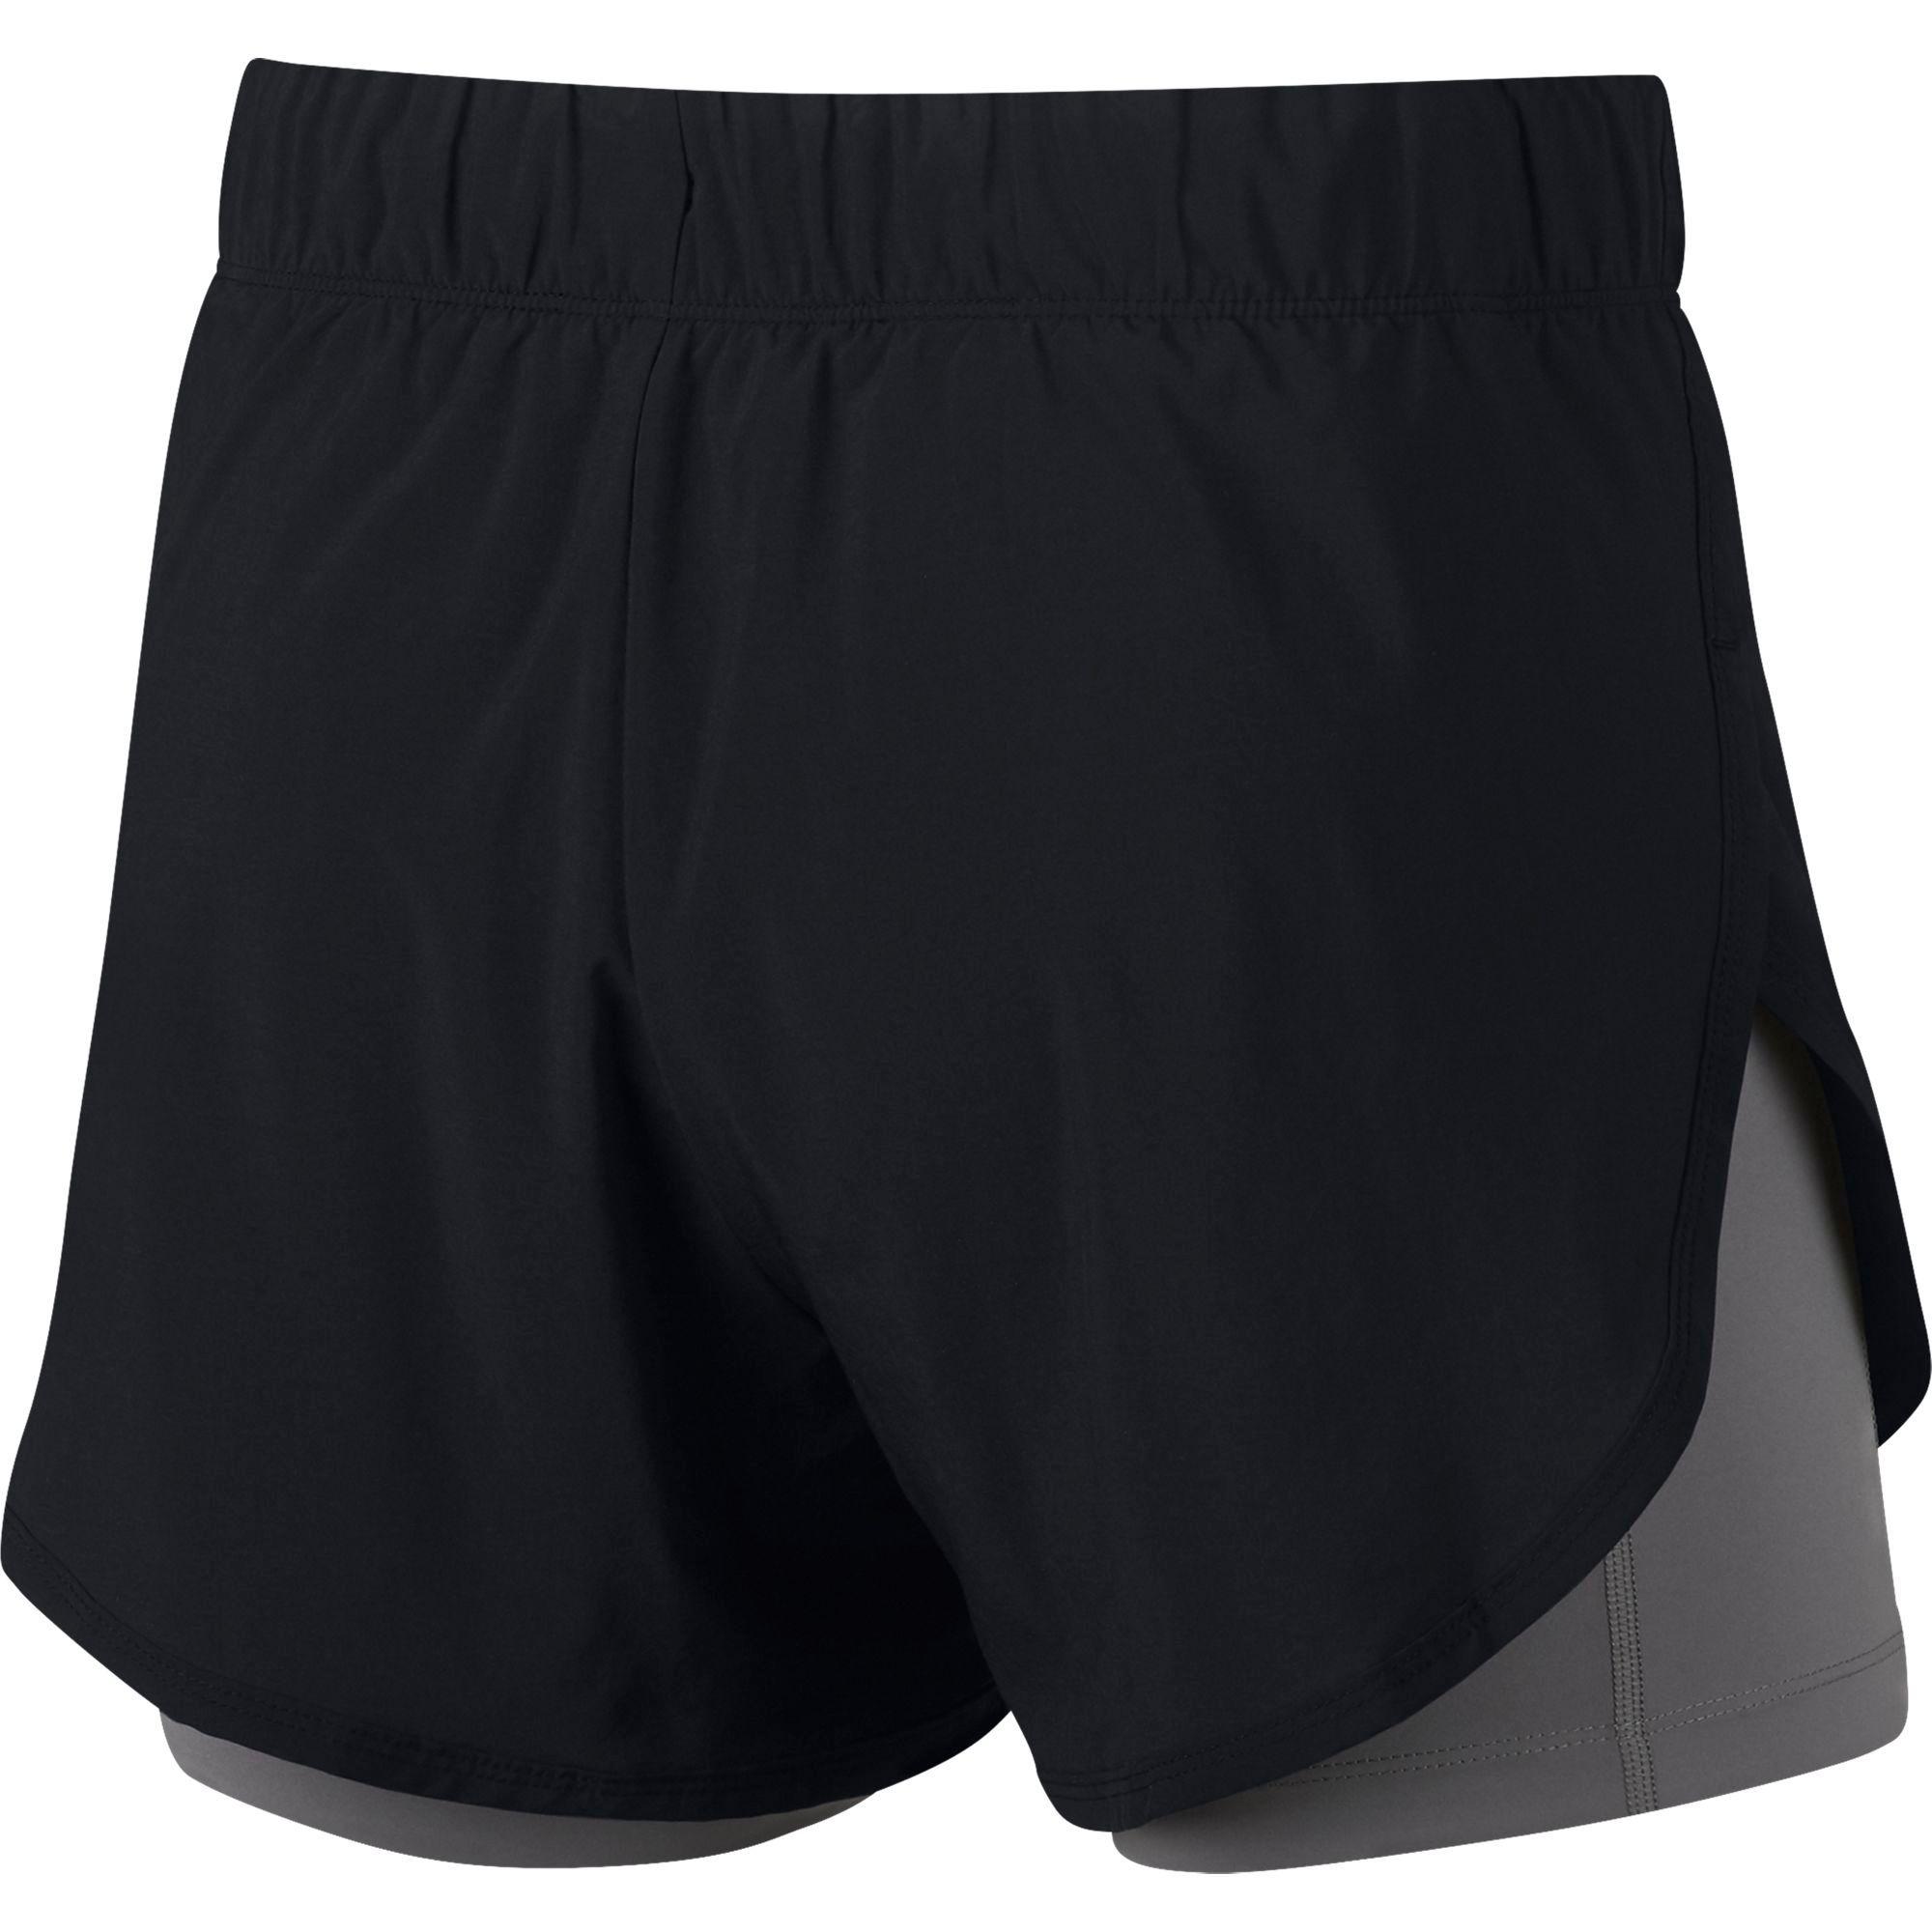 Nike Flex 2-in-1 Shorts in Black - Lyst